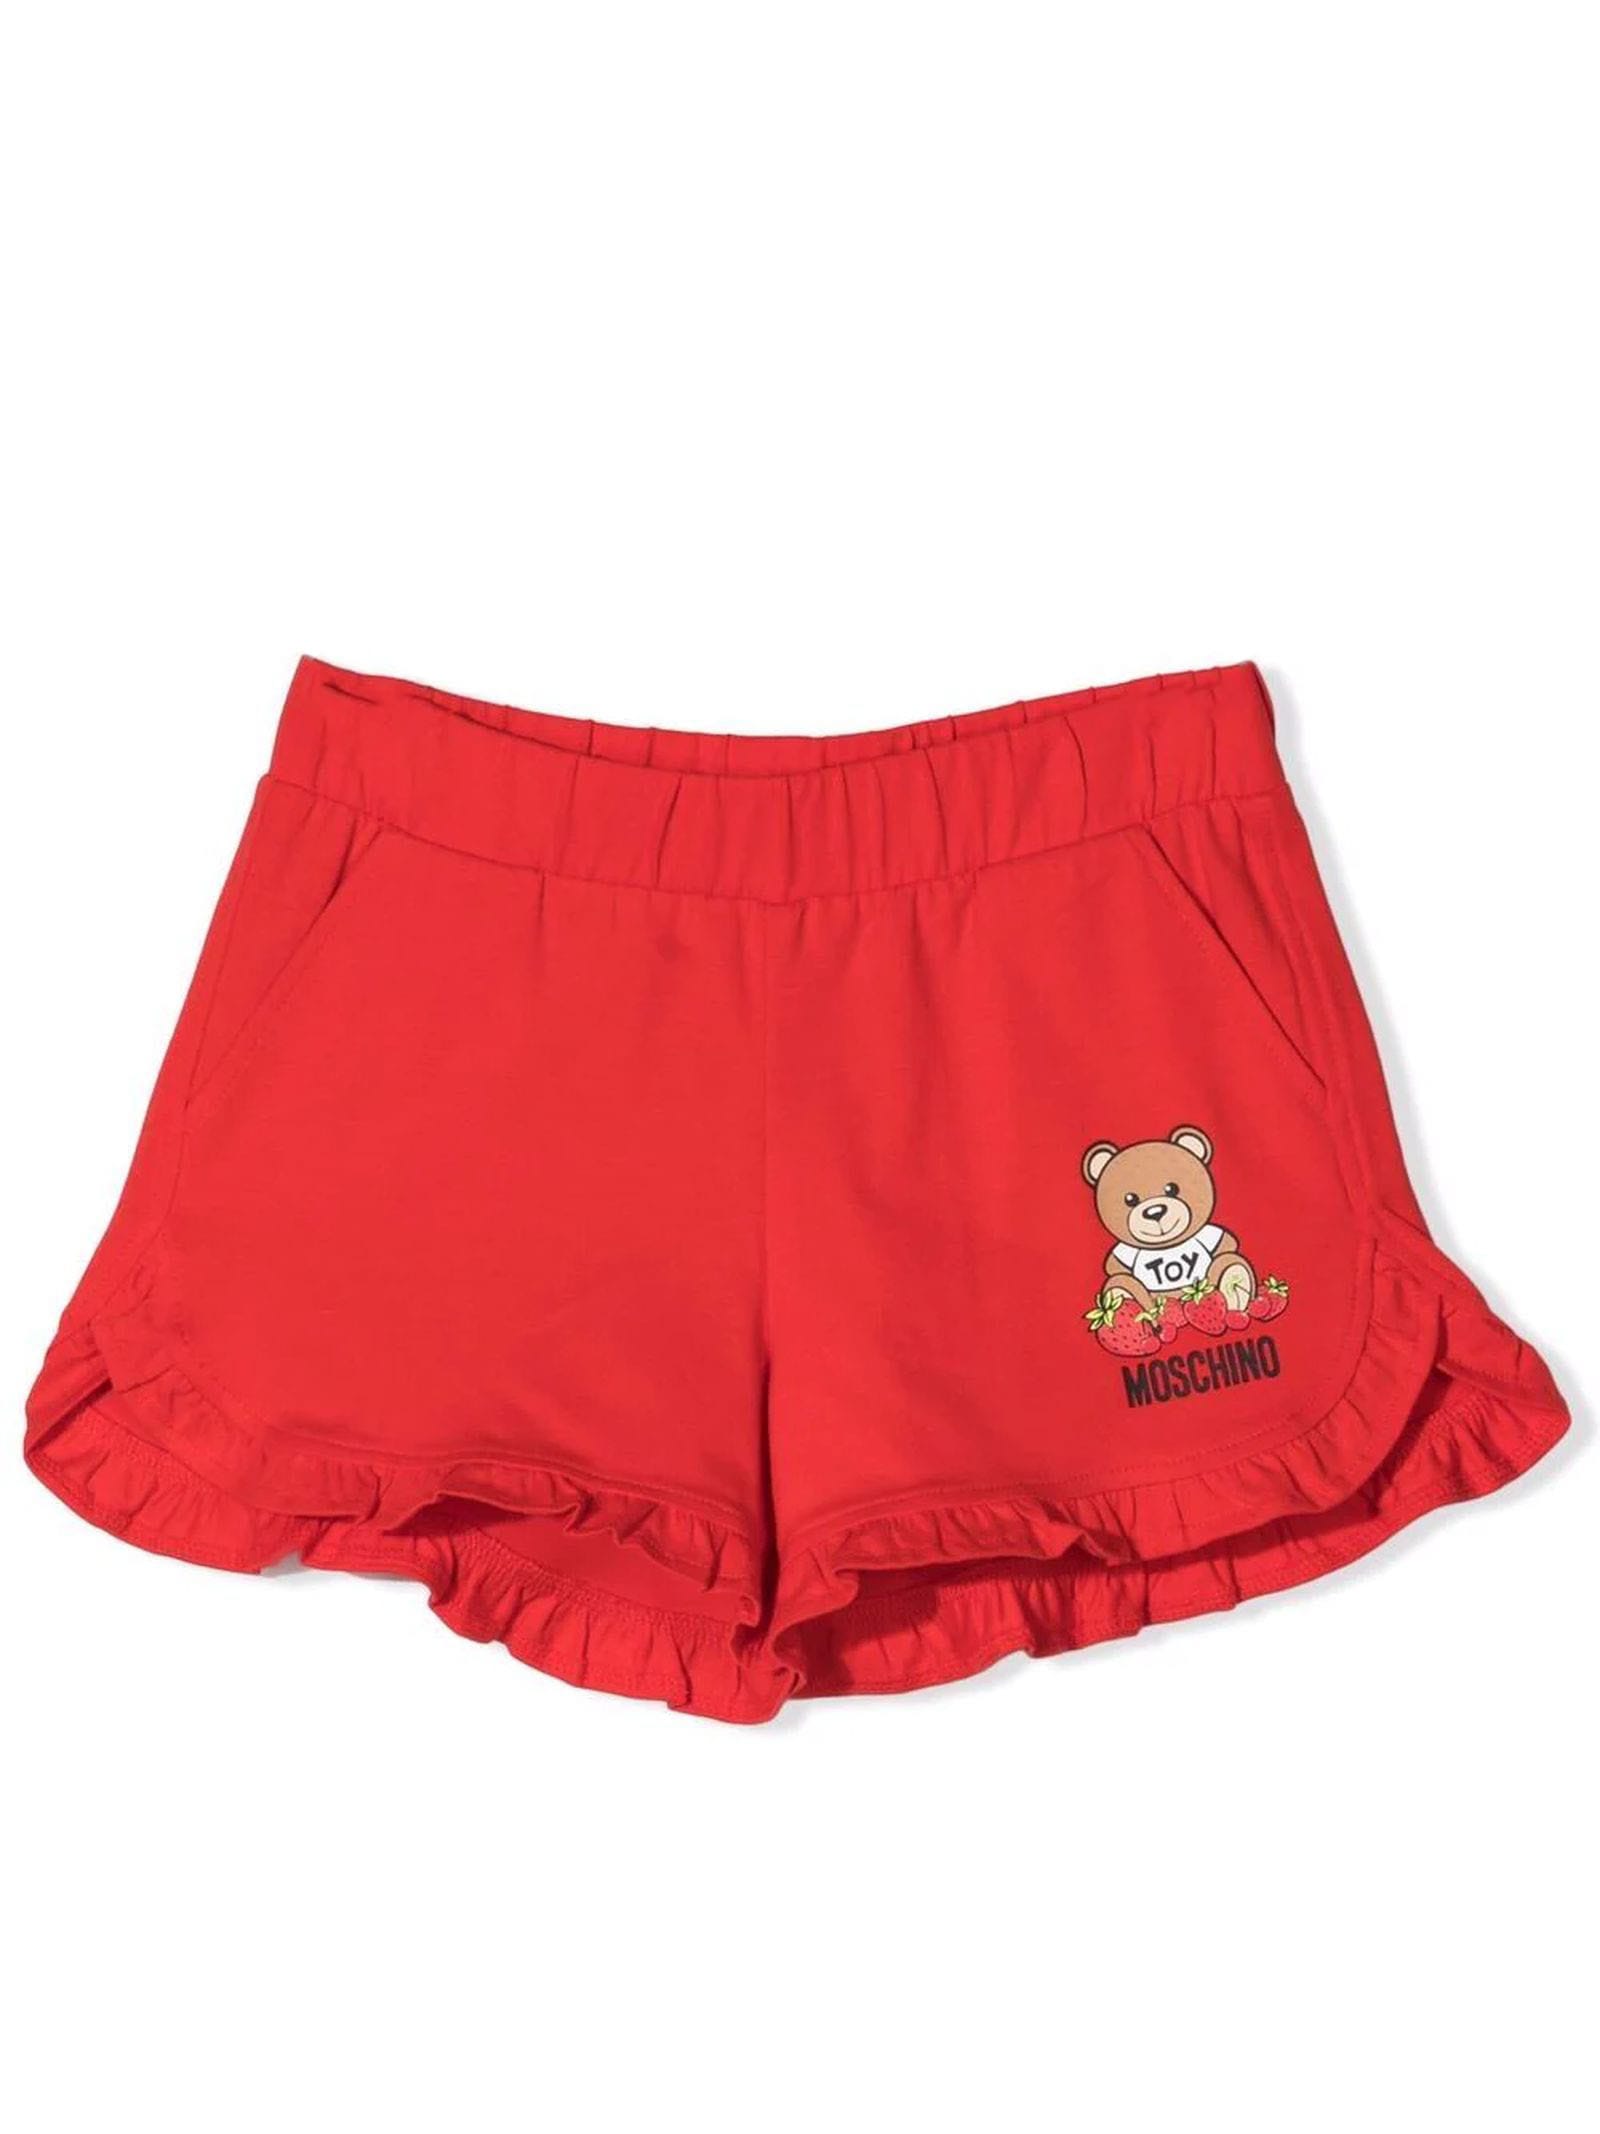 Moschino Red Cotton Shorts